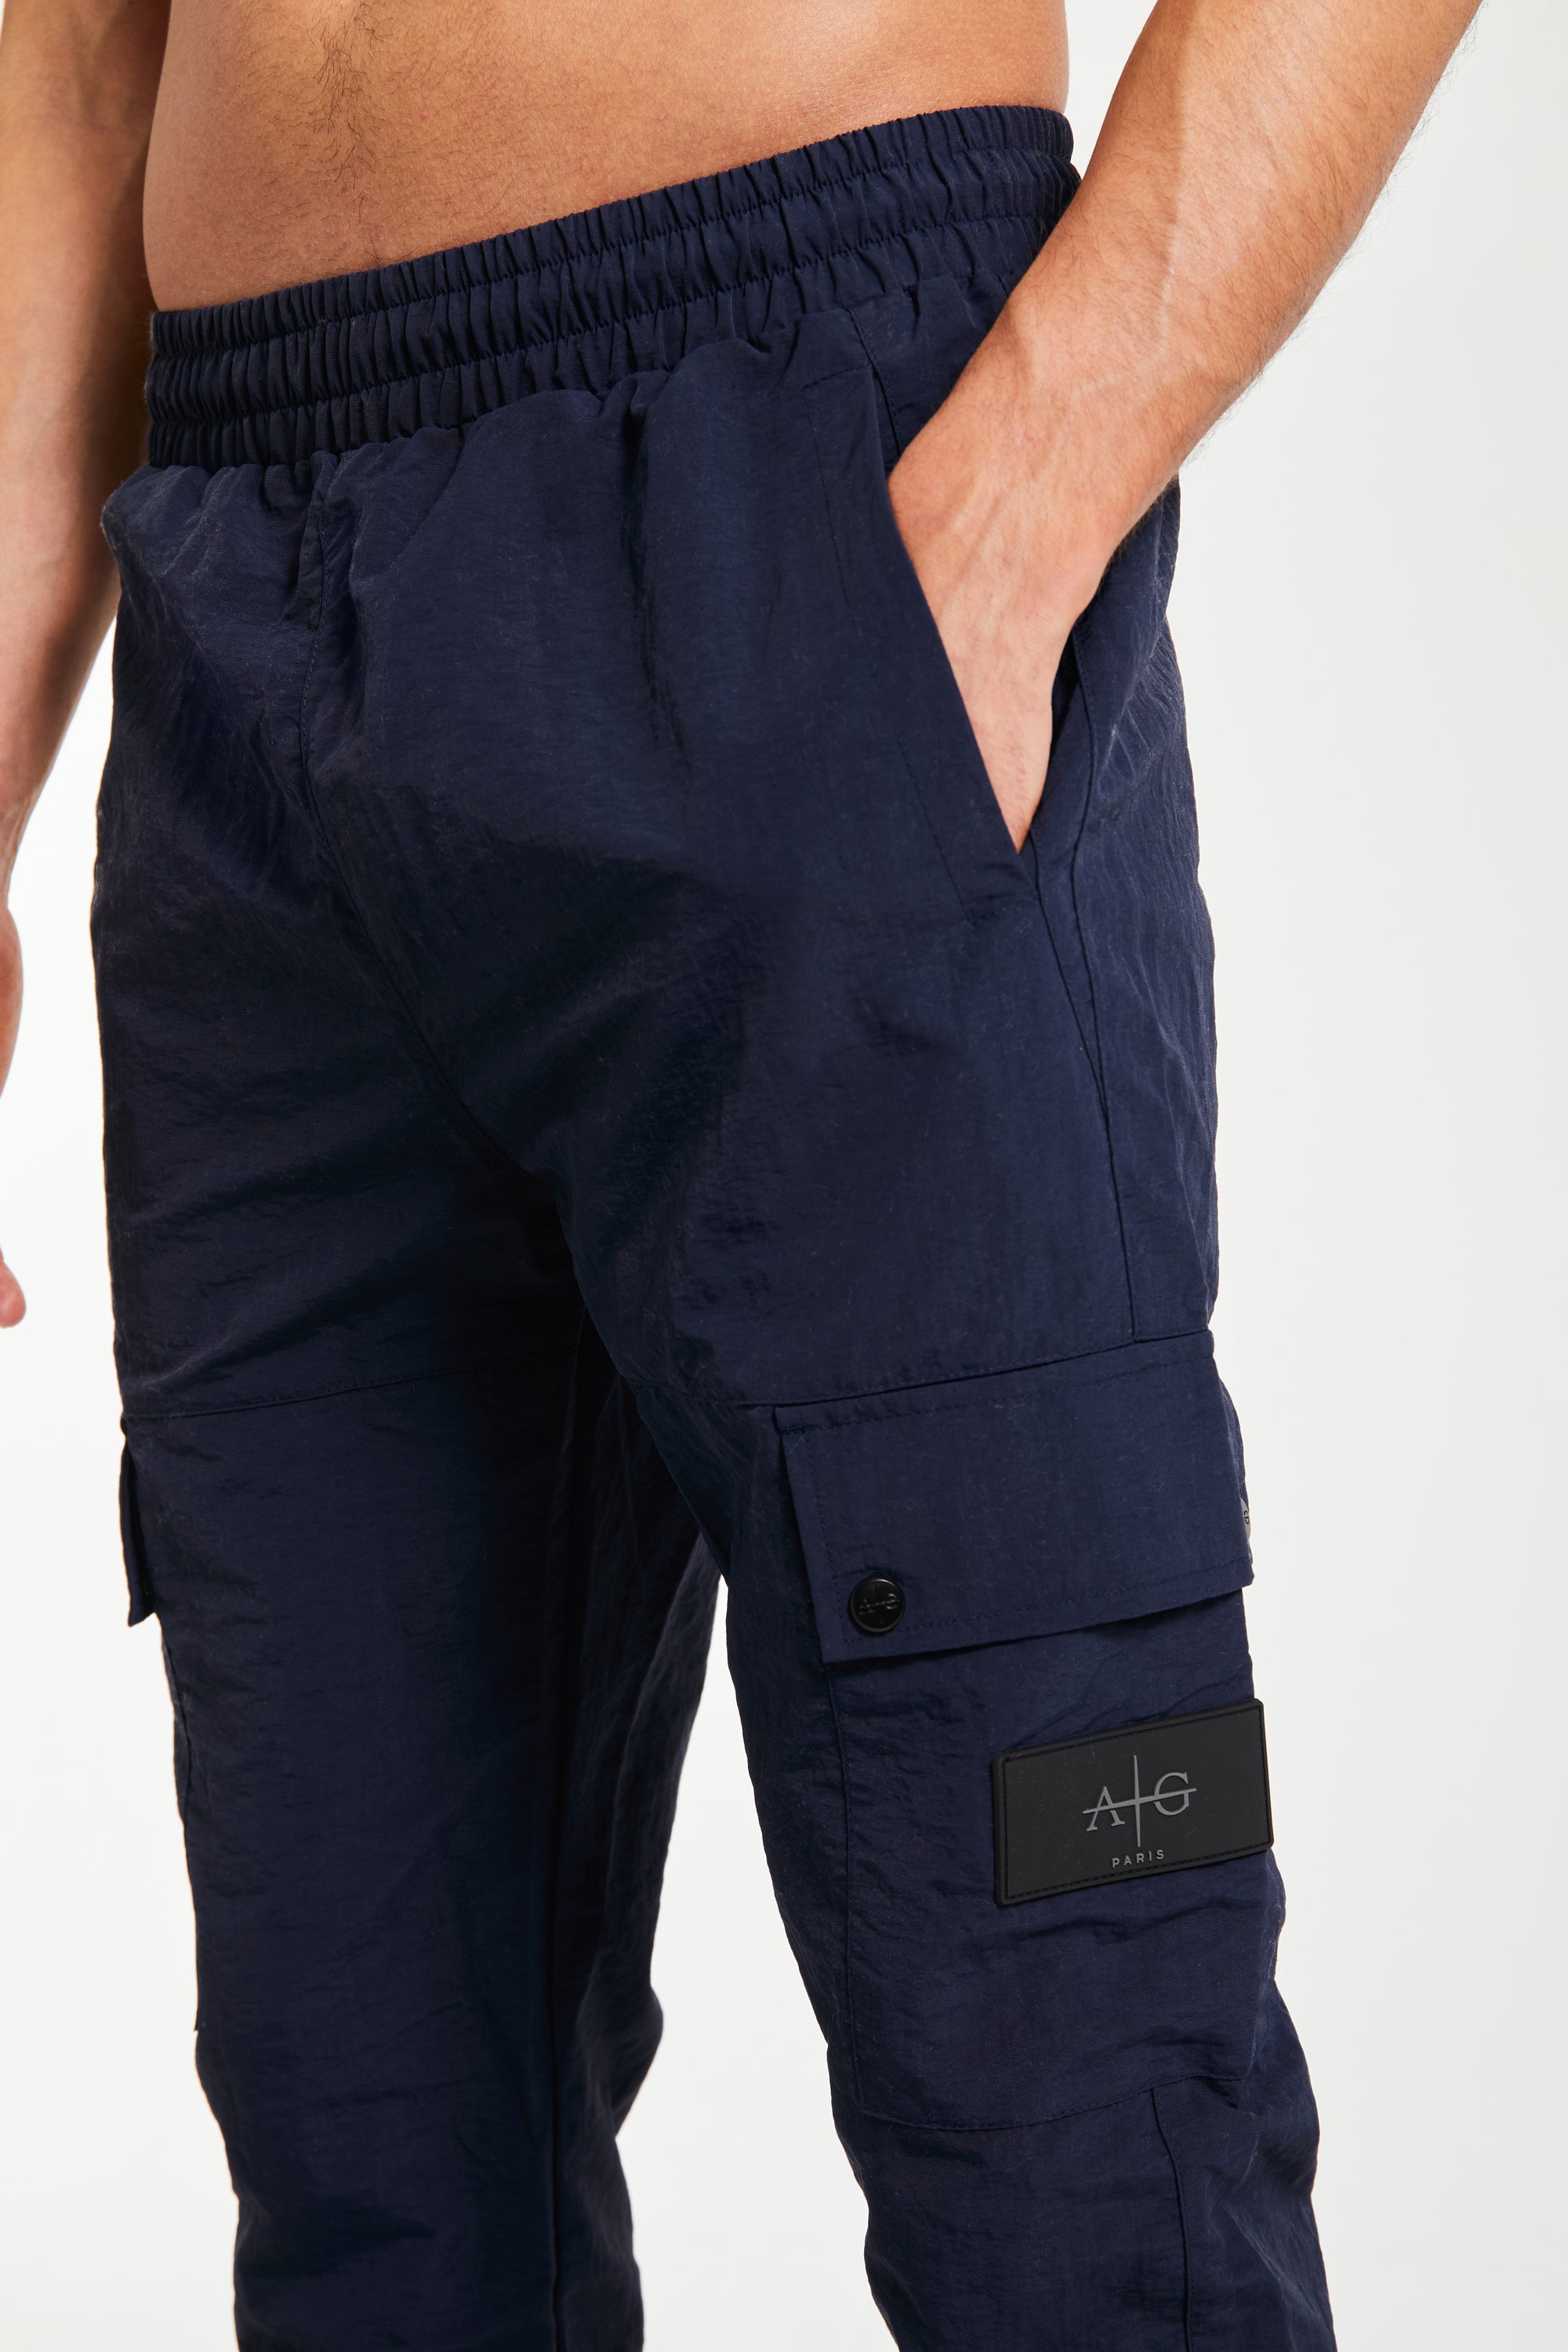 Men&#39;s cuffed cargo pants sale close up showing &#39;Avant Garde Paris&#39; logo in navy blue